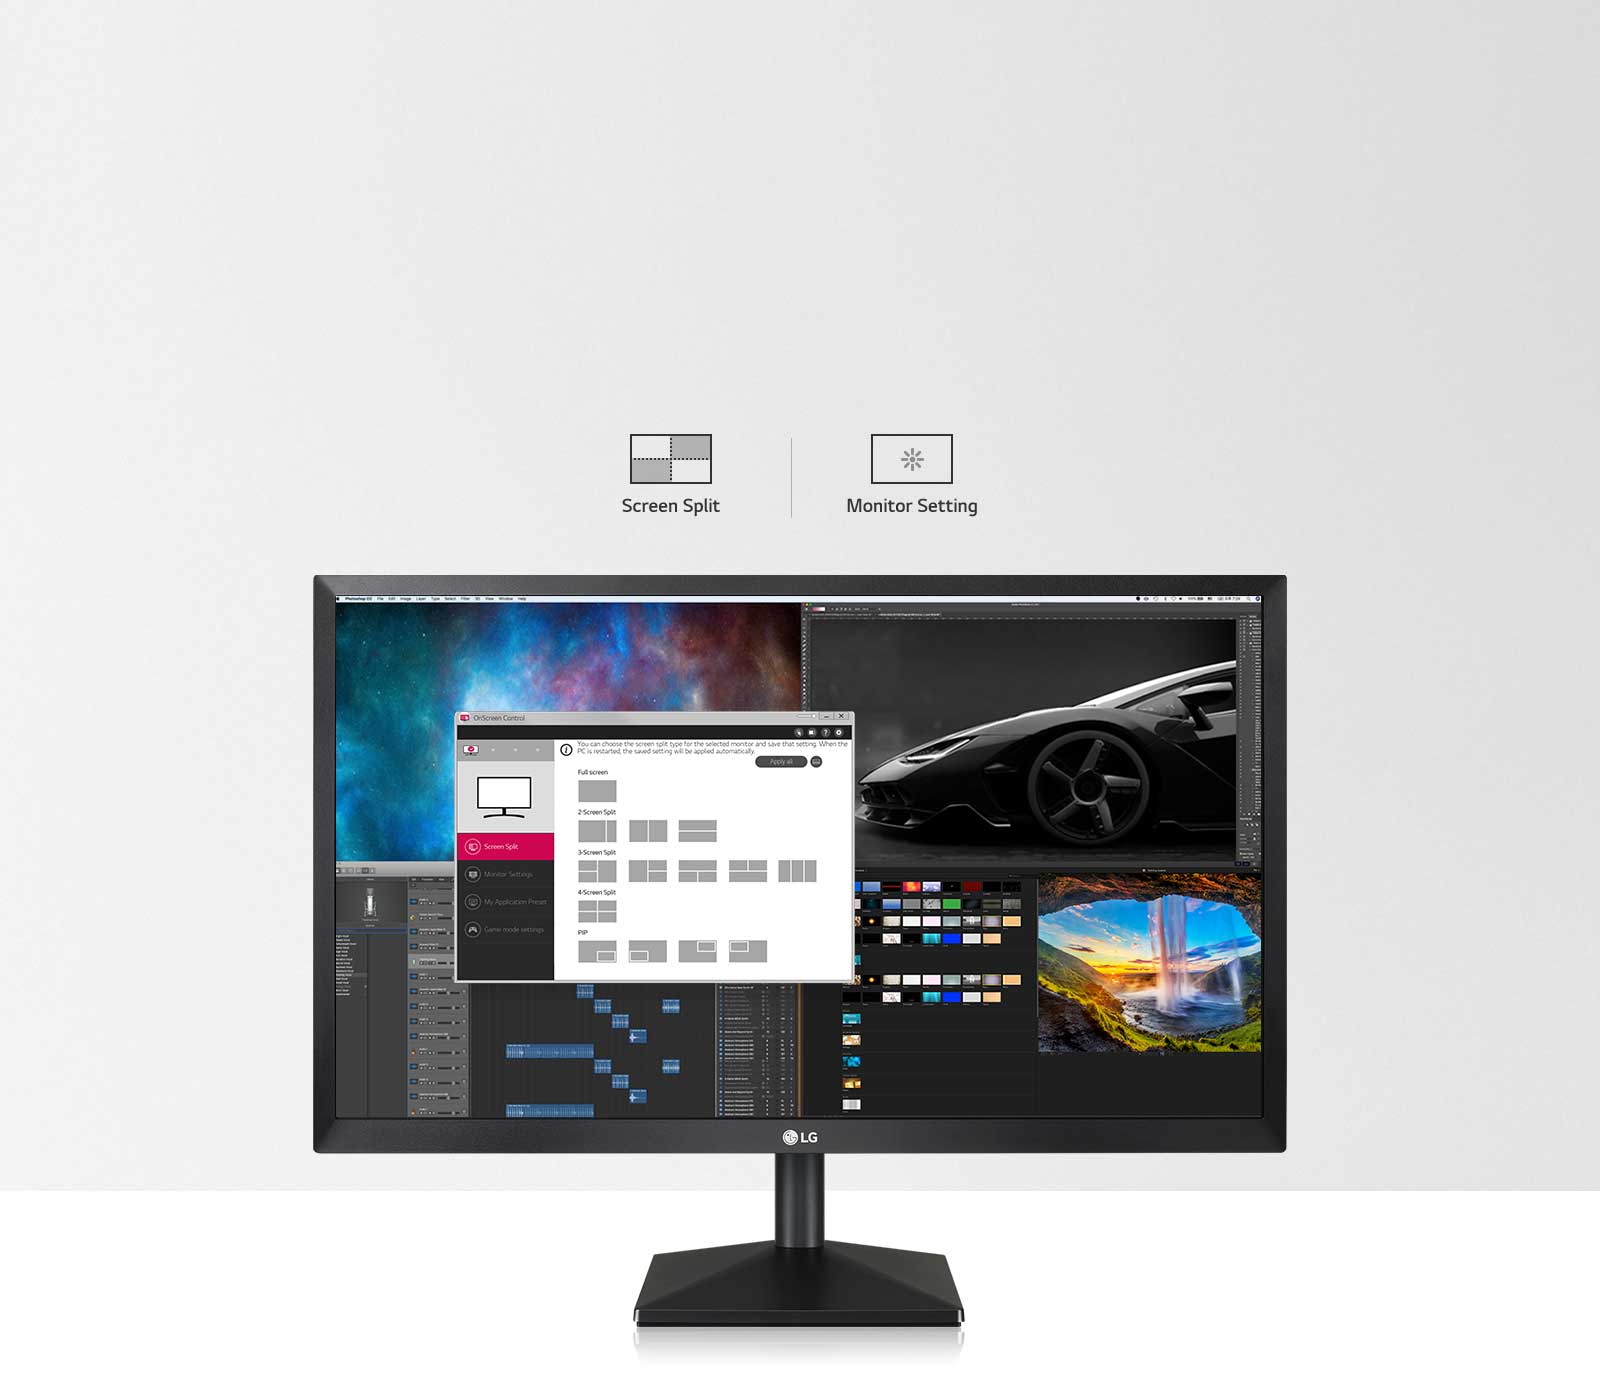 Image of 22MN430M-B monitor displaying multiple windows with key monitor setting